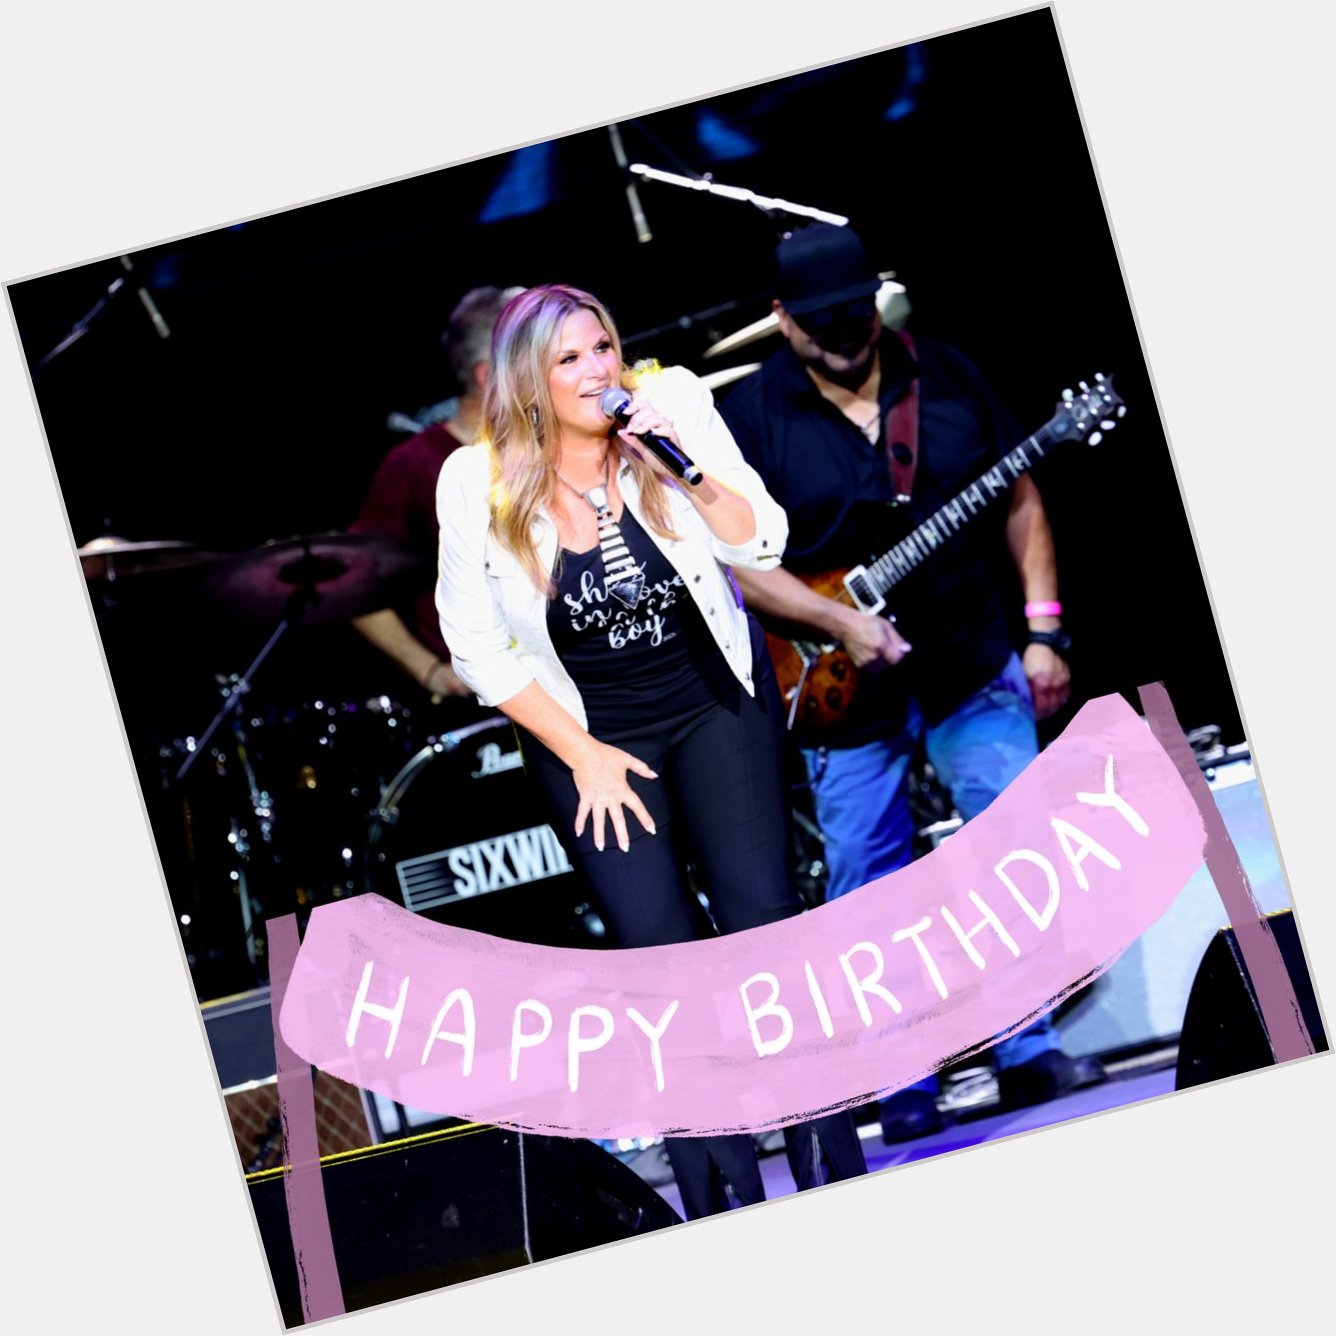 Happy Birthday to Trisha Yearwood! Blast her music today and send a birthday message!  